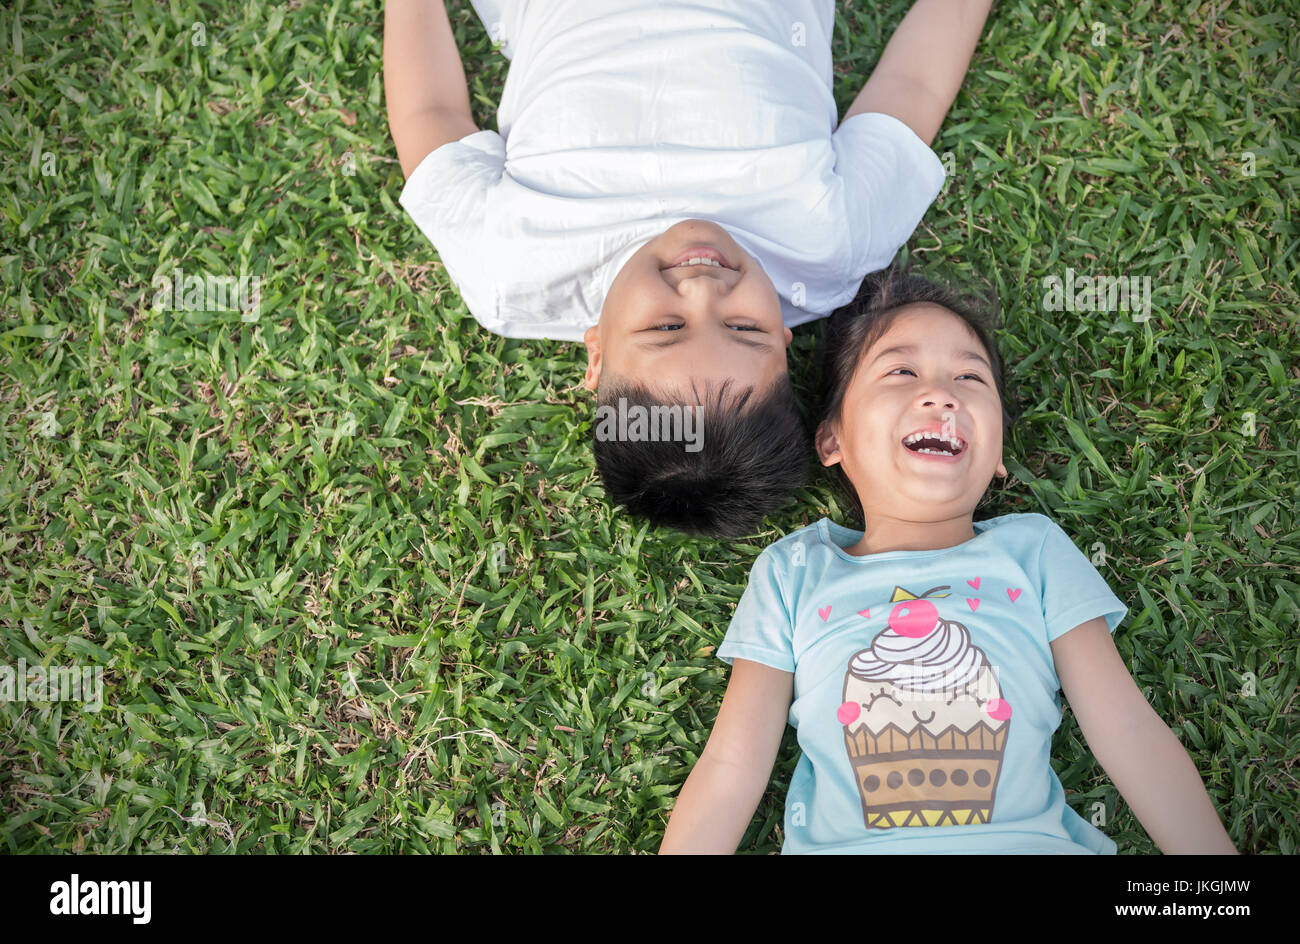 Smile children lie down on grass, concept recreation and liesure Stock Photo